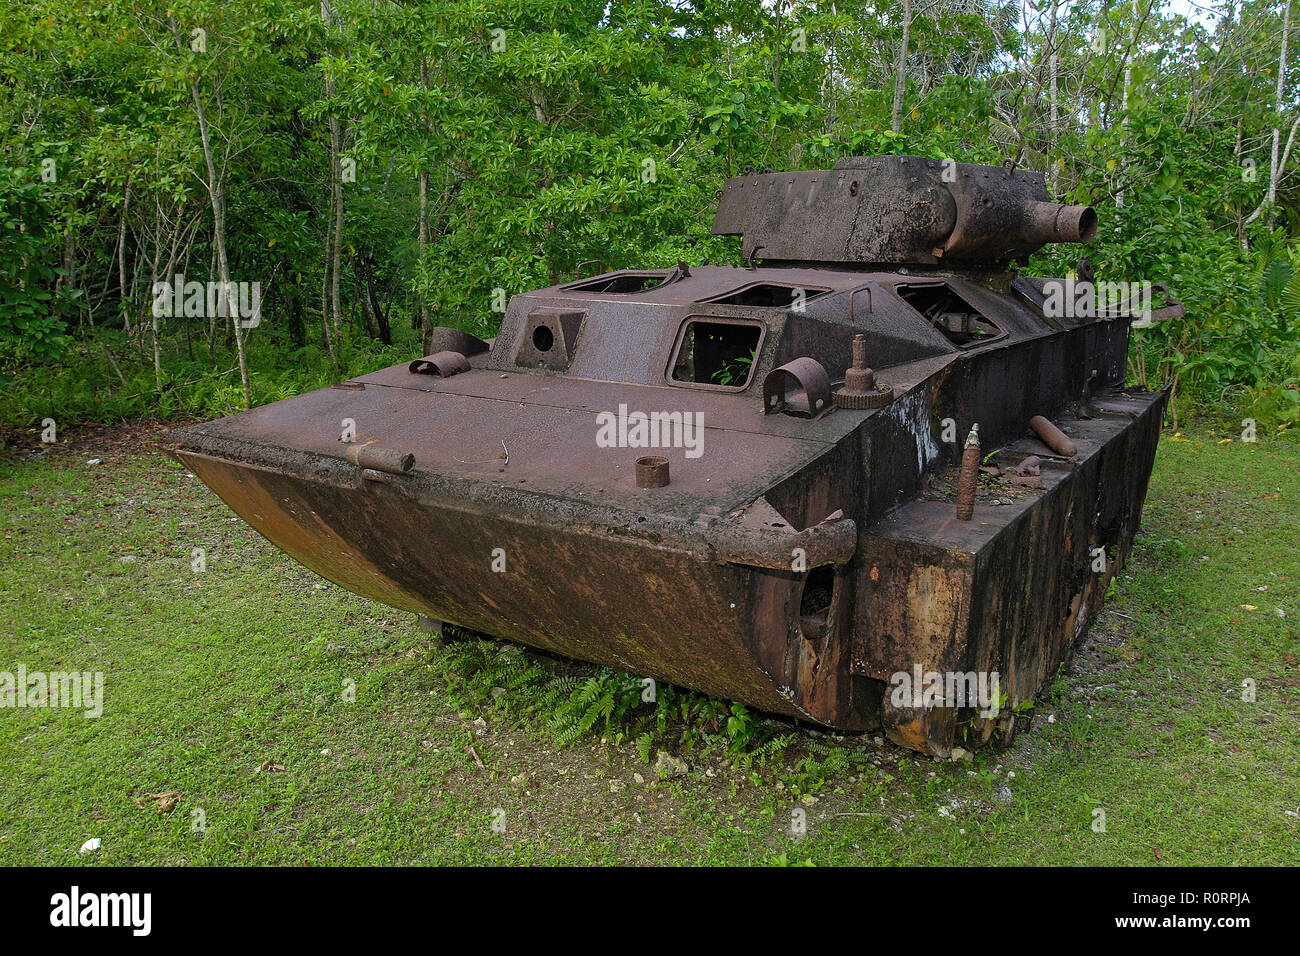 Verrosteter Panzer aus dem 2. Weltkrieg im Dschungel, Palau, Mikronesien | Rusty tank of 2nd world war at jungle, Palau, Micronesia Stock Photo